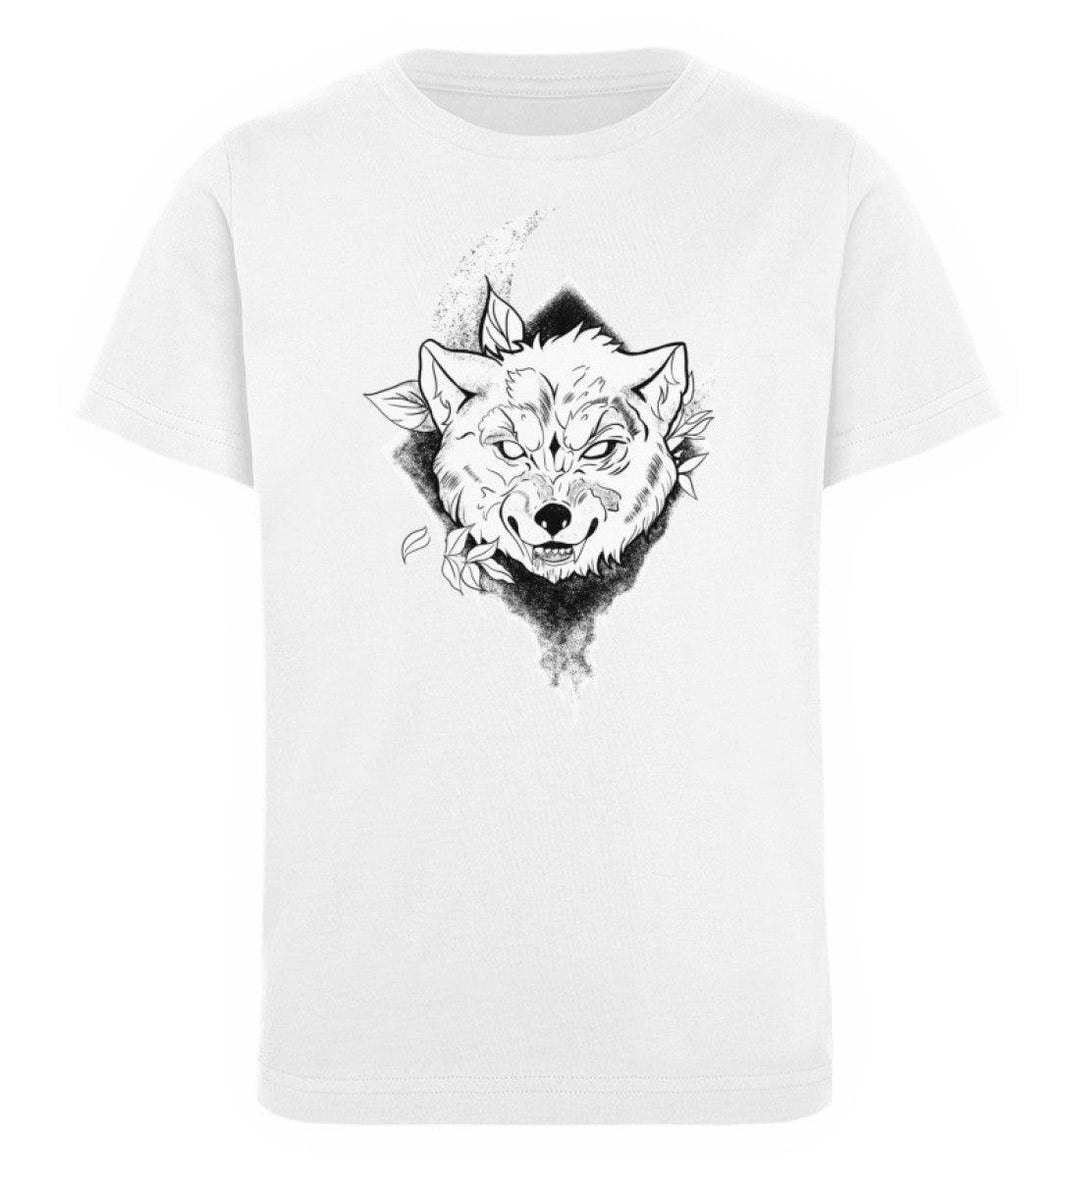 Bad Wolf - Kinder Bio T-Shirt